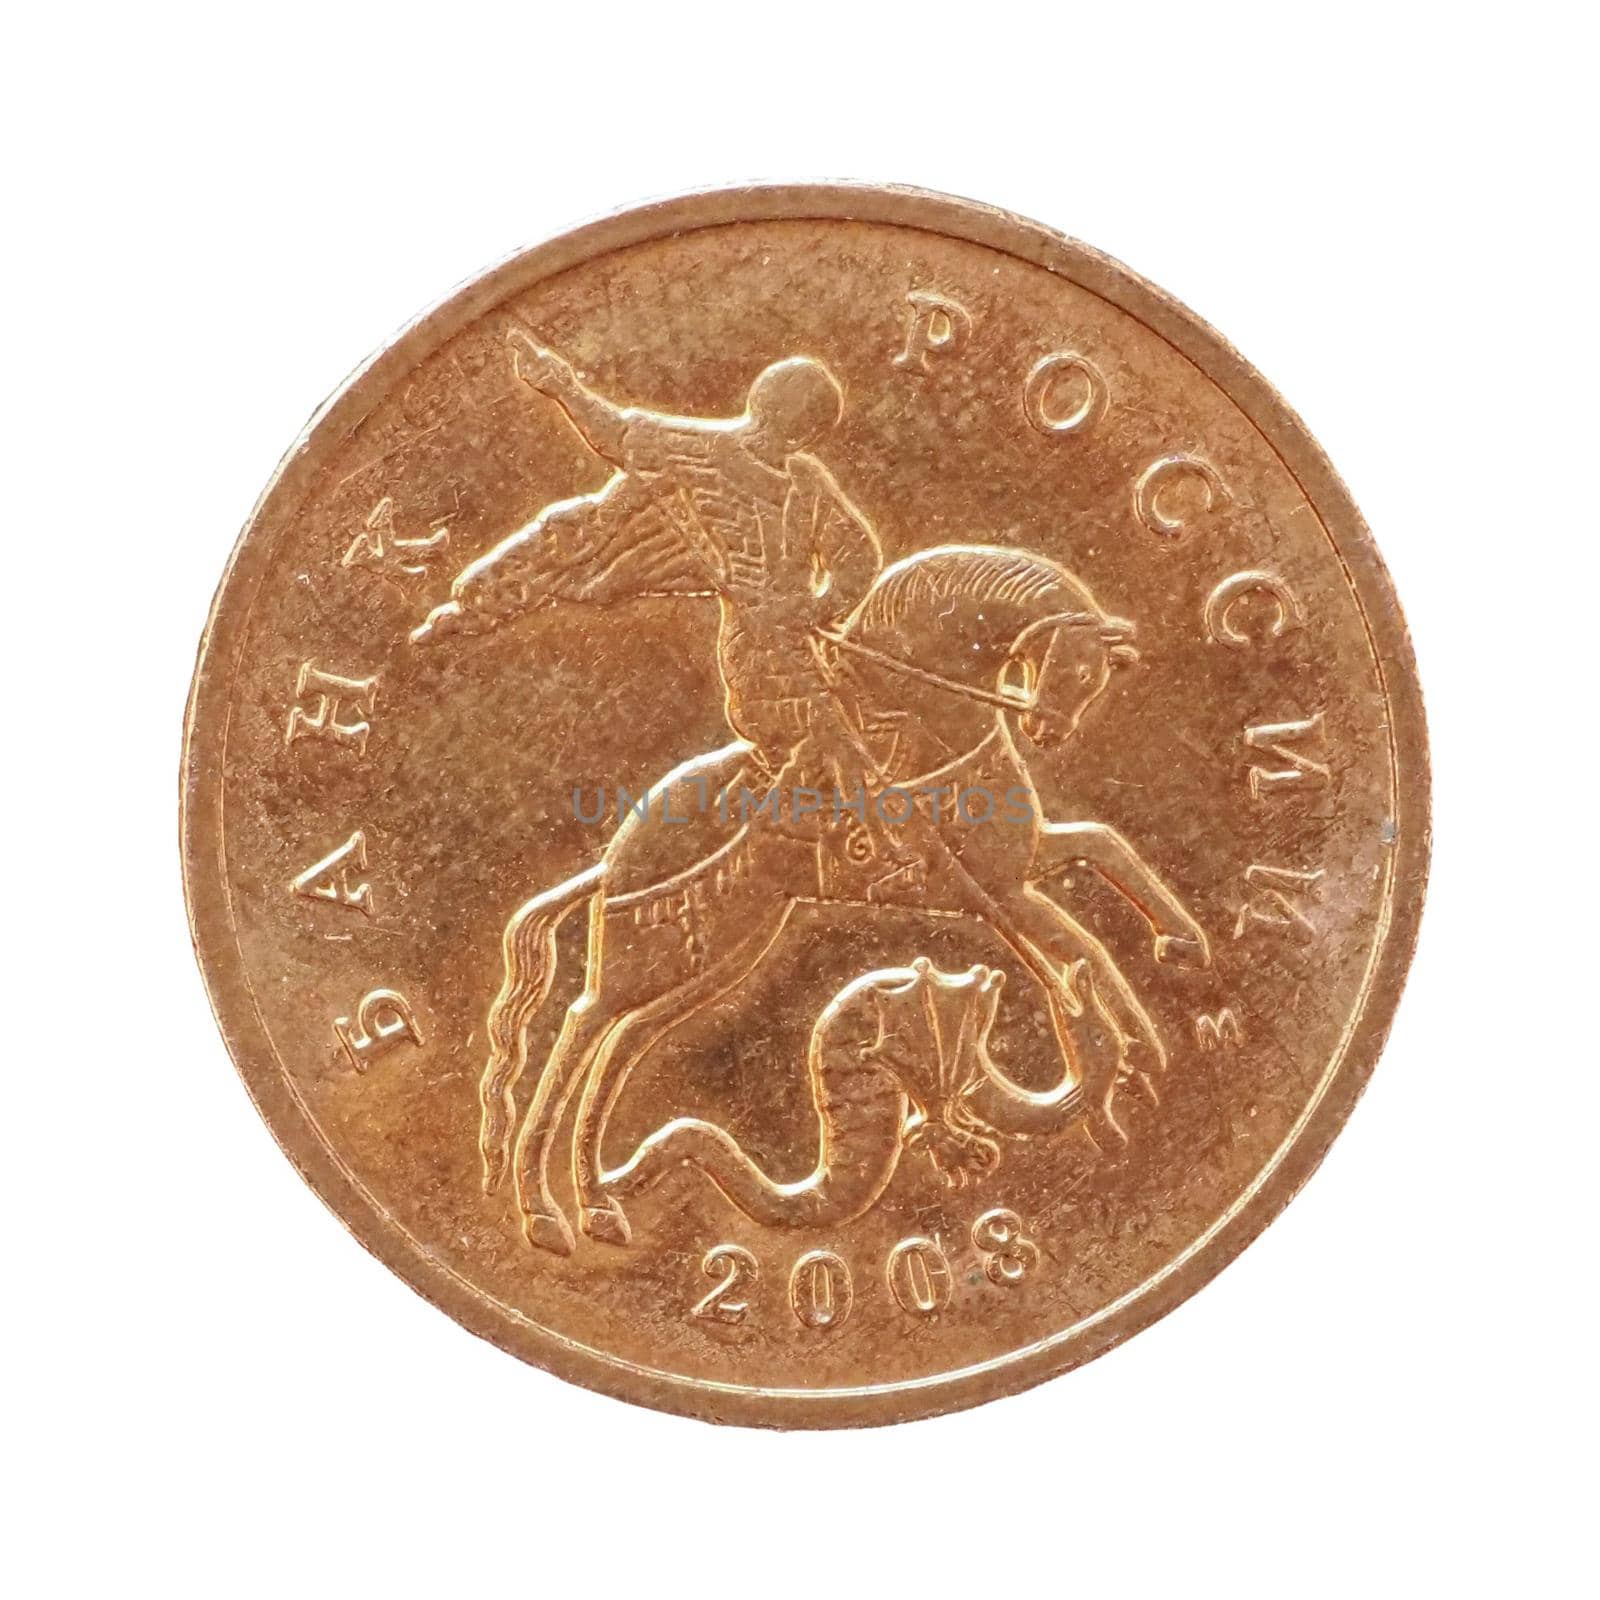 50 Ruble cents coin, Russia by claudiodivizia